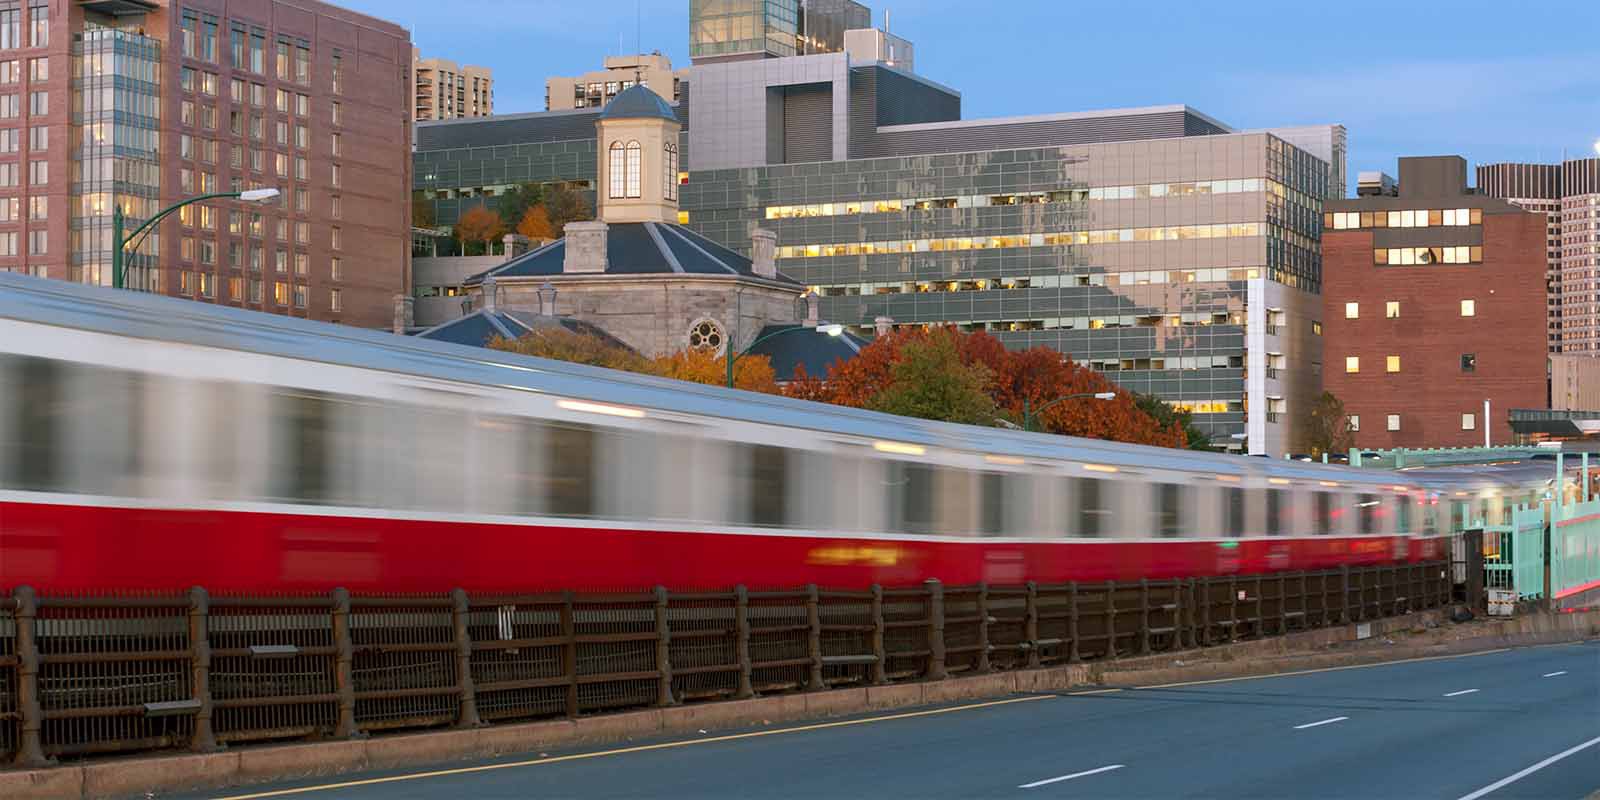 Blurry red line train in Boston